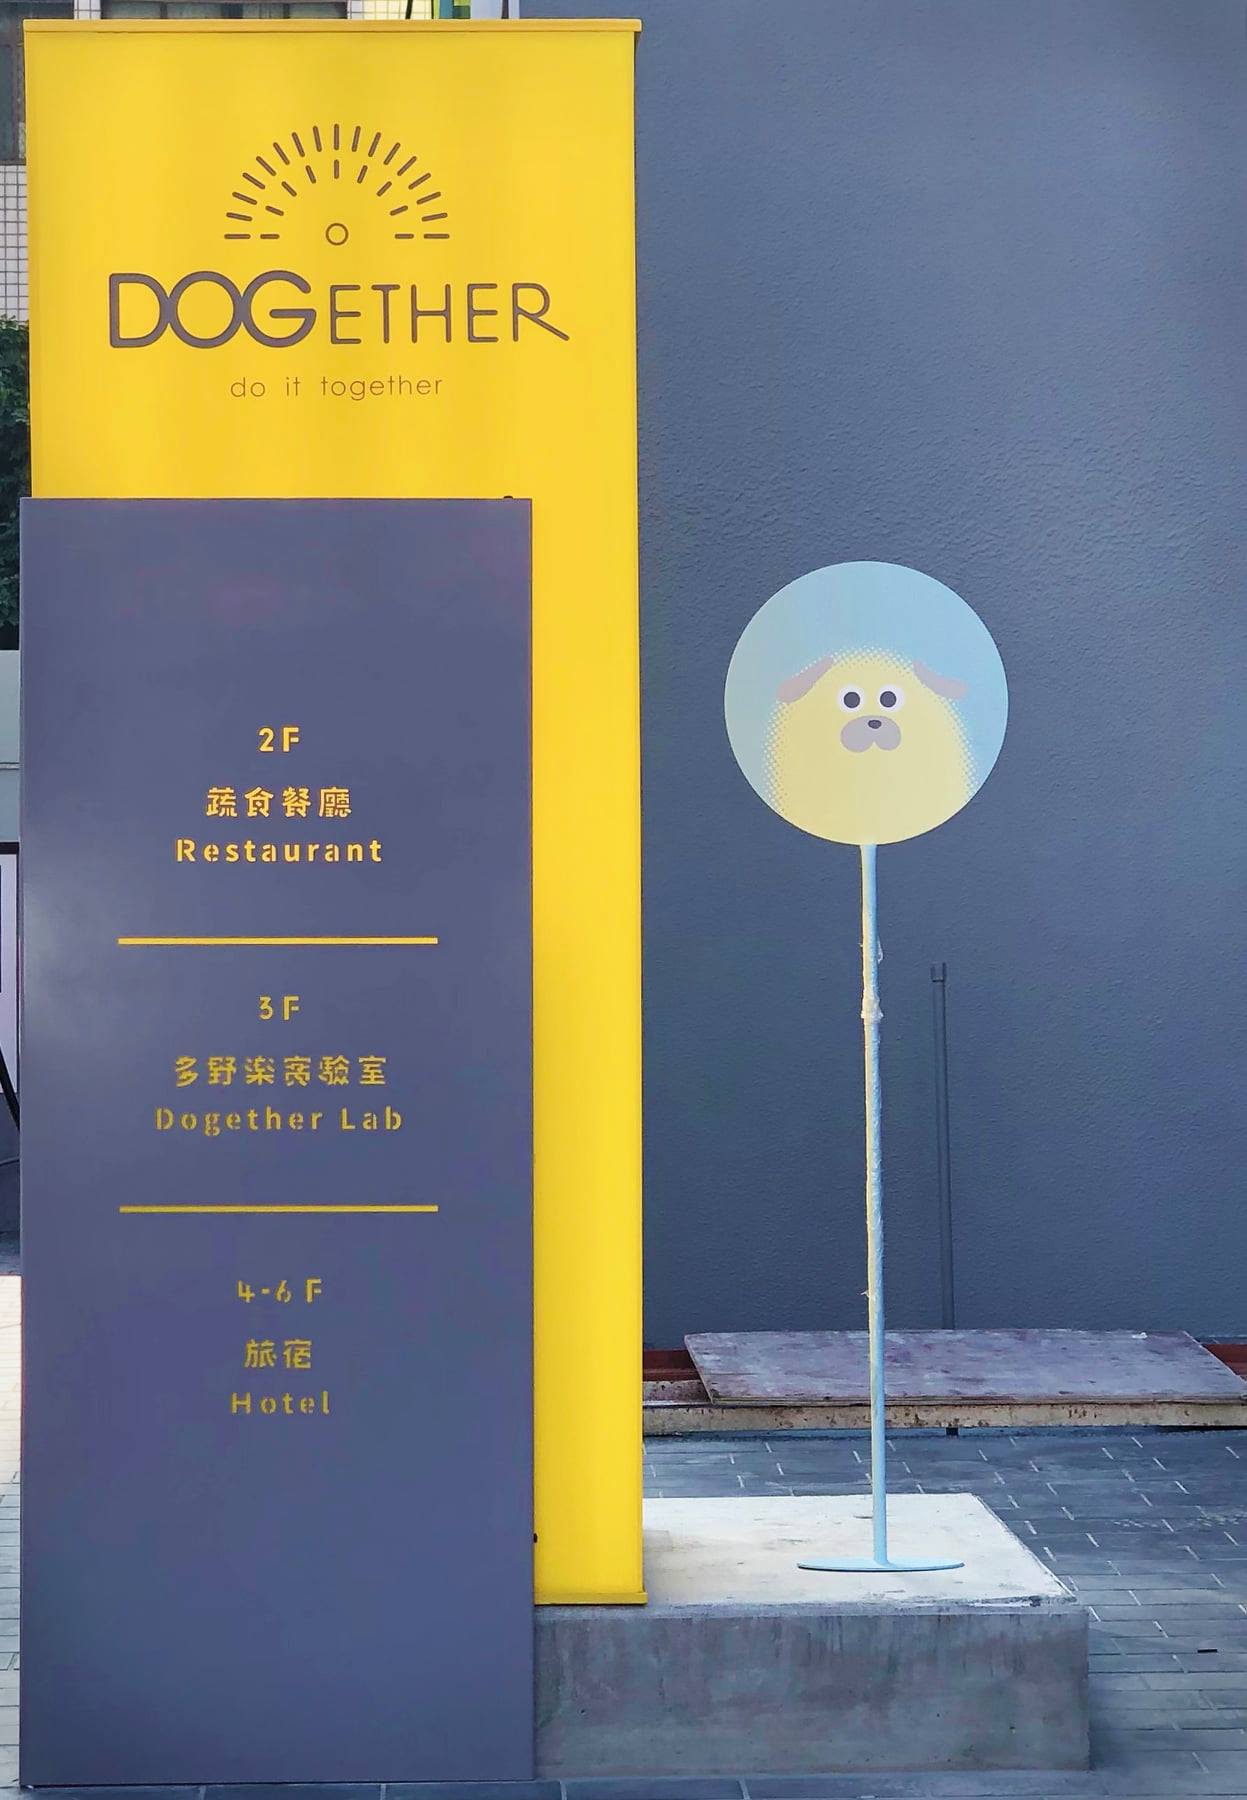 Dogether Hotel 多野樂旅館 8 - Travel of Rice 小米遊記